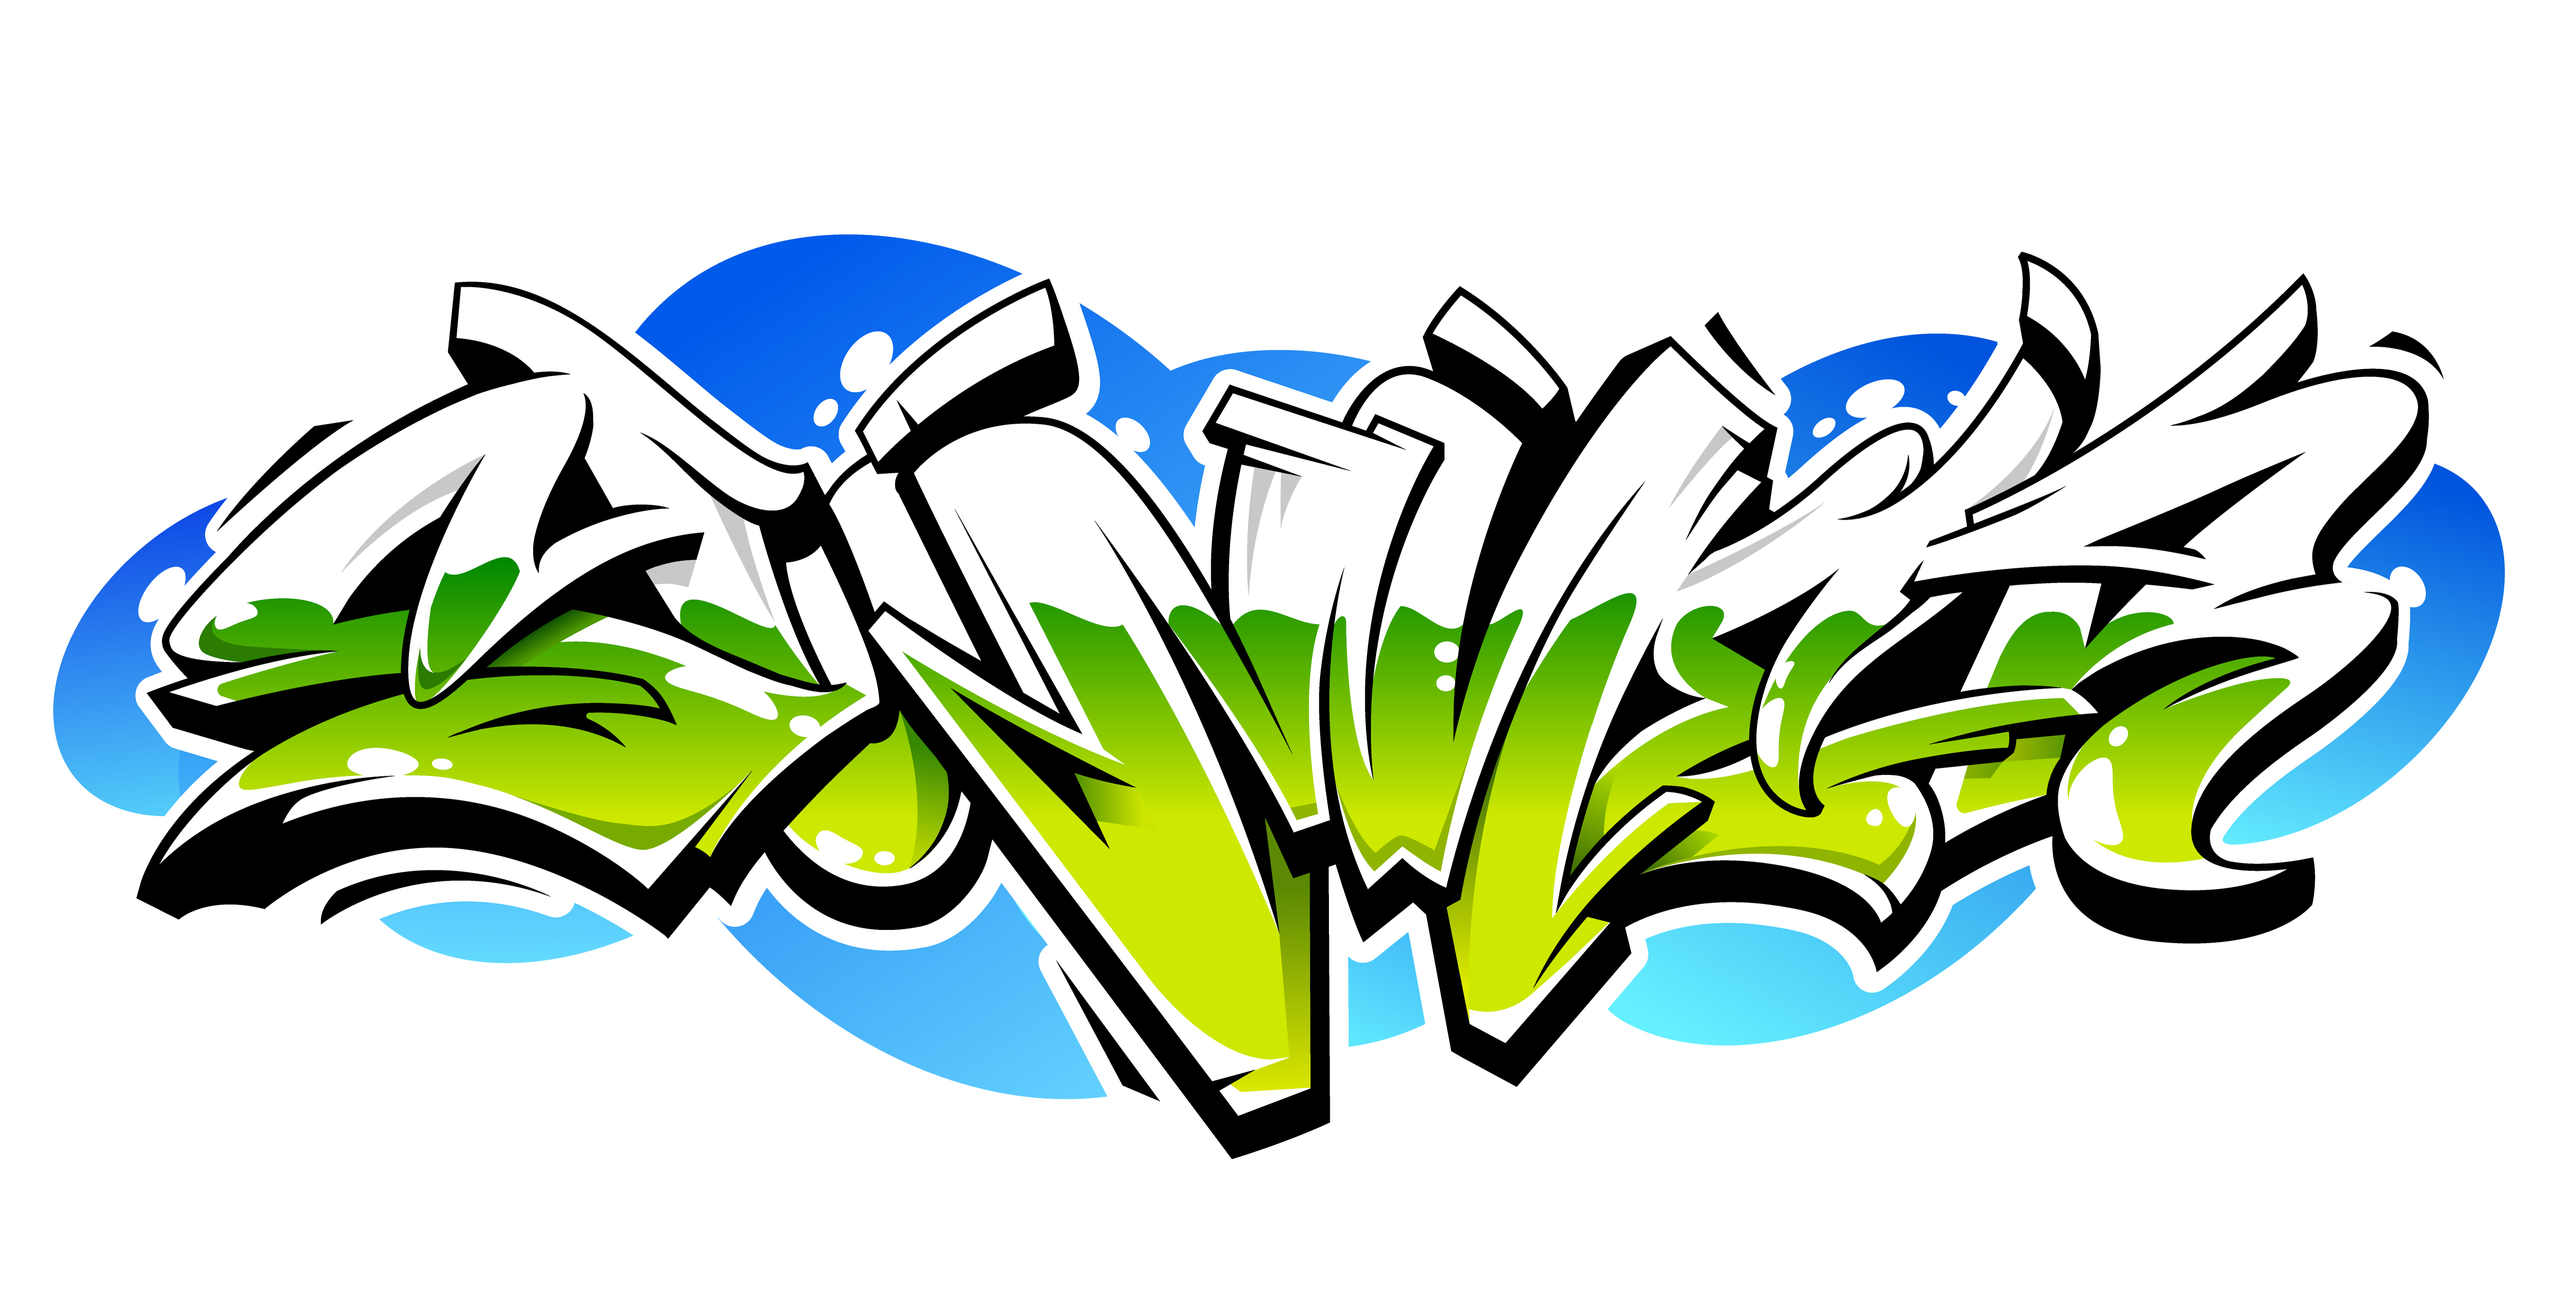 Sommer-Graffiti-Vektor-Beschriftung - Download Kostenlos ...